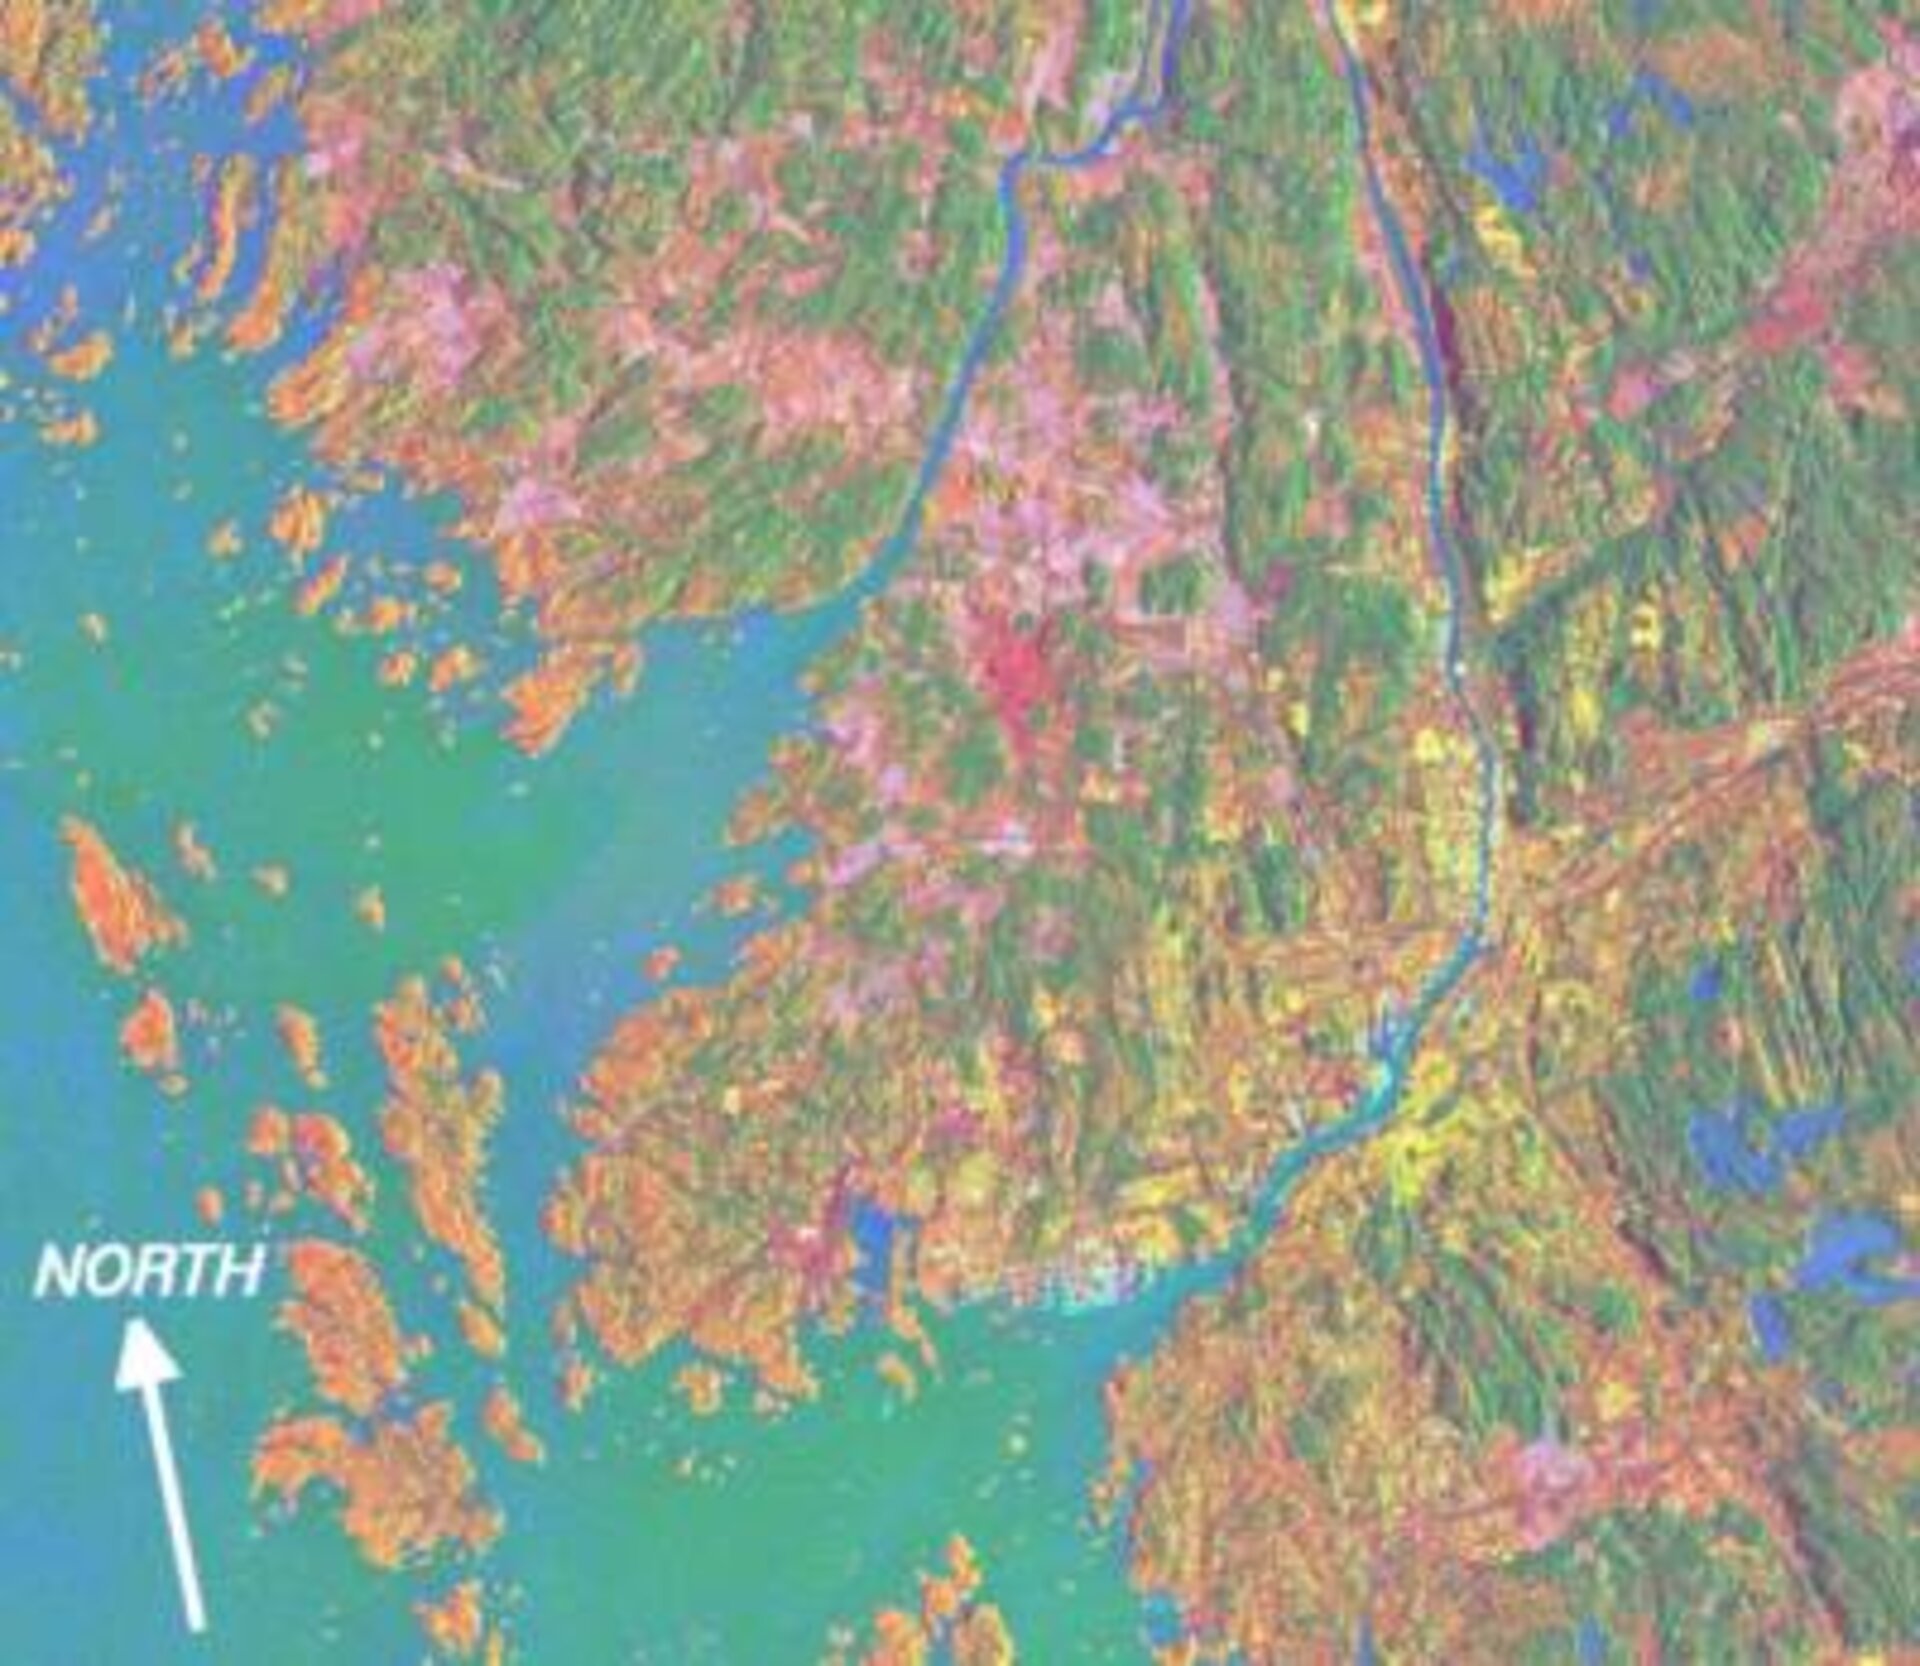 Interferometric SAR image over Gothenburg